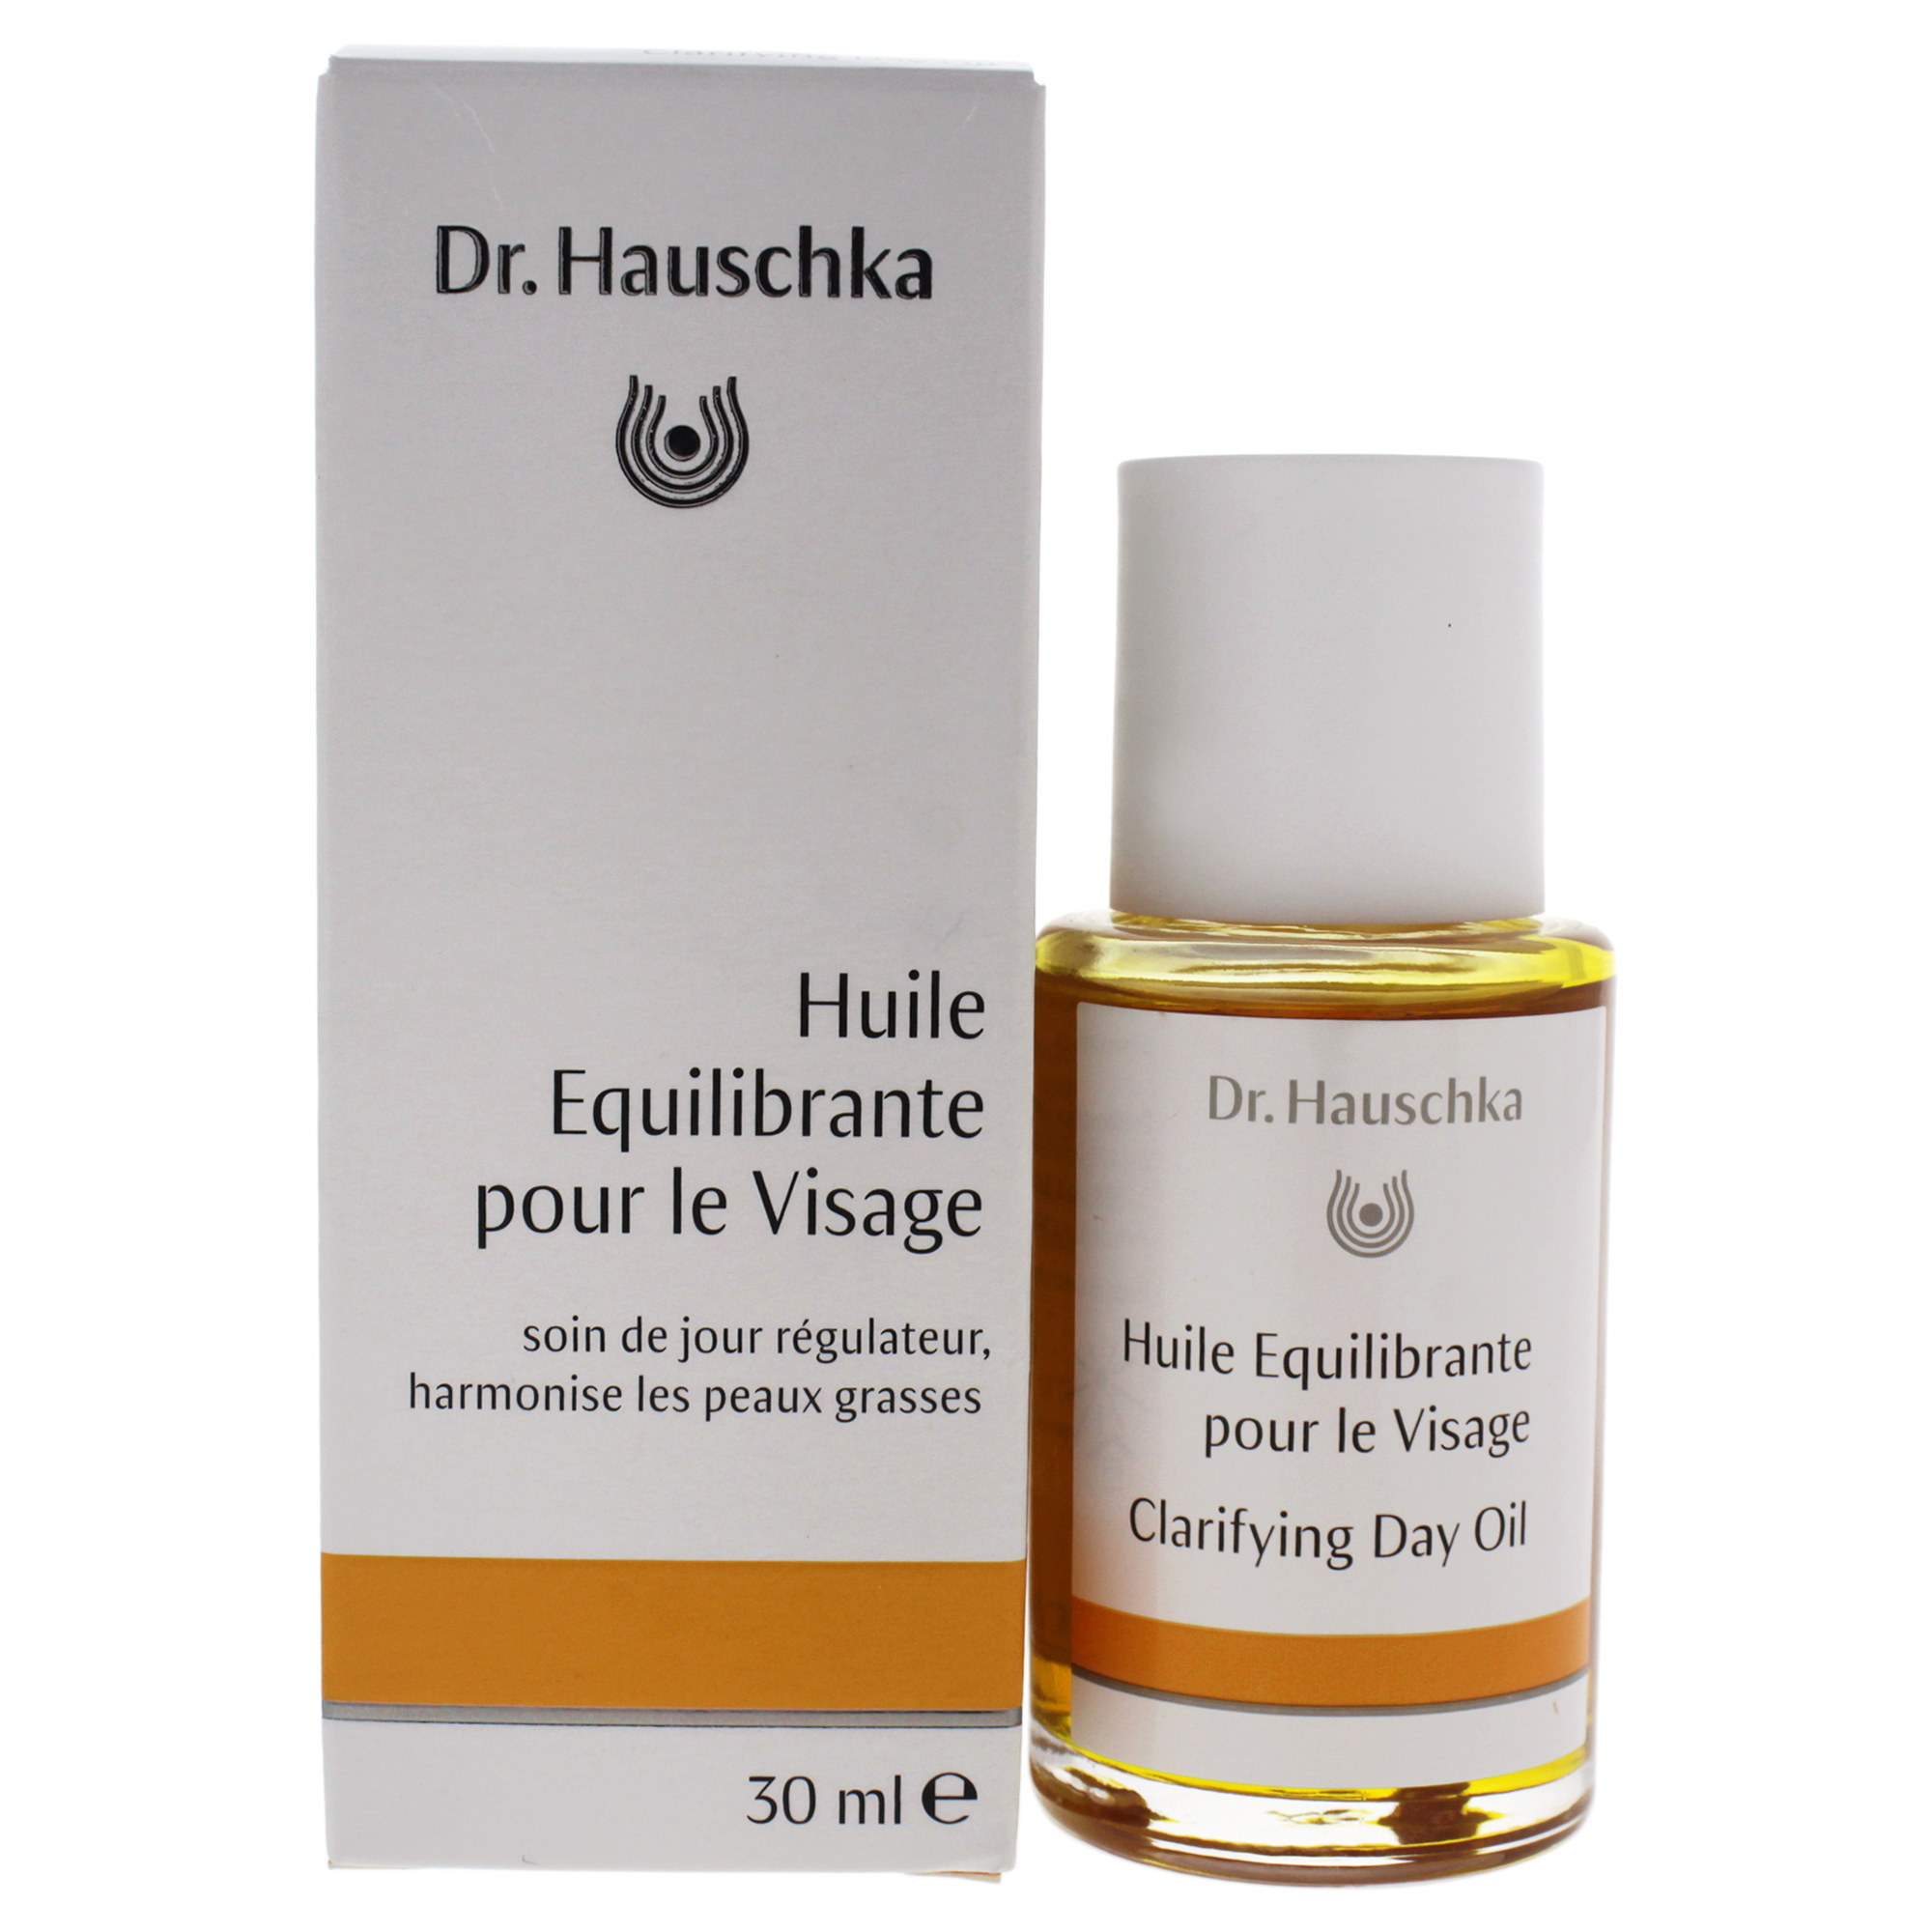 Dr. Hauschka - Dr. Hauschka Clarifying Day Oil Body Oil dedans Dr Hauschka Reviews 